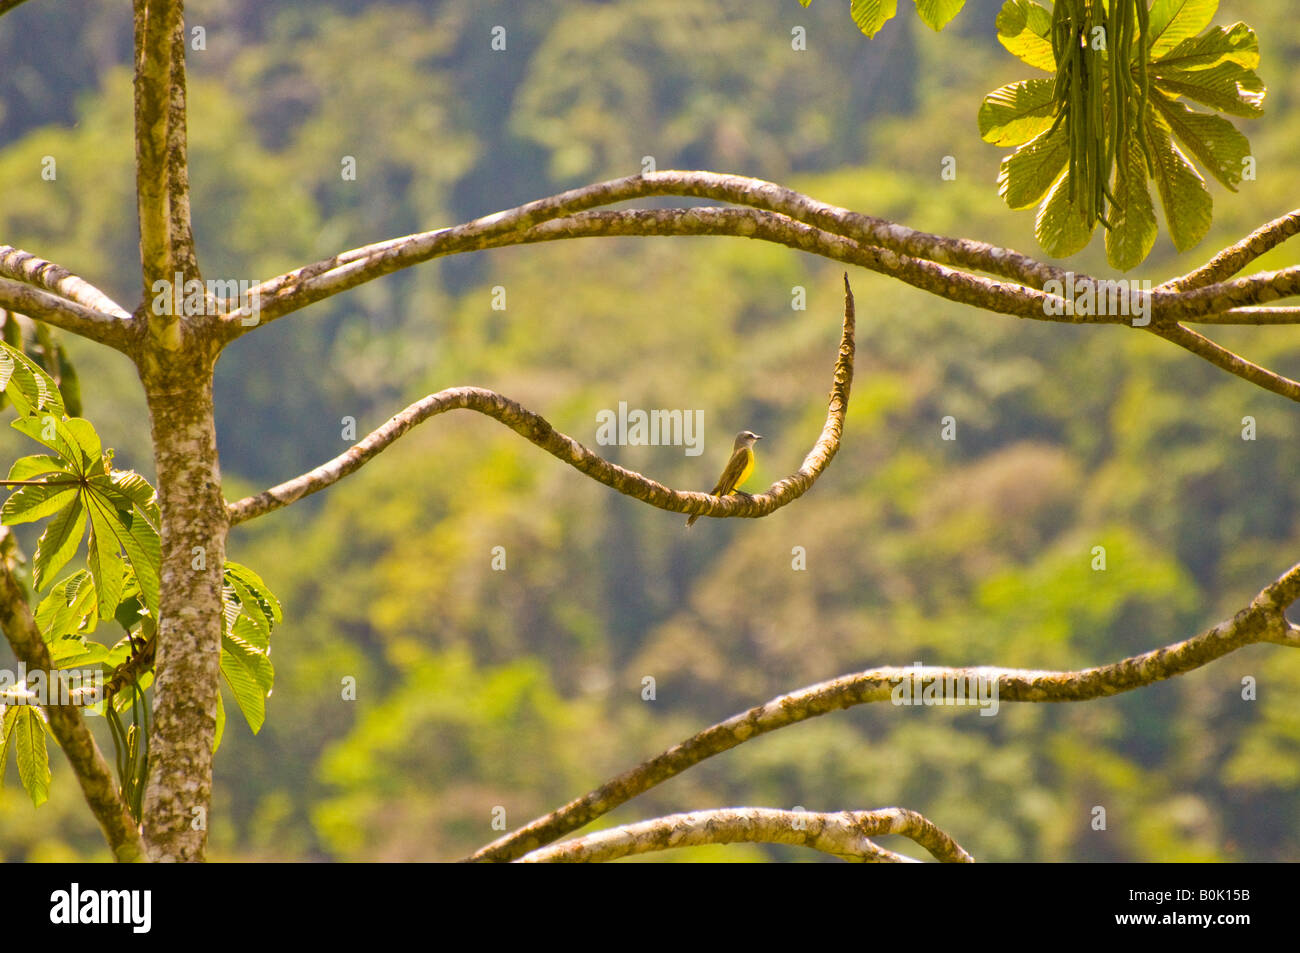 COSTA RICA Gray gekappt Fly Catcher Vogel ruht auf Dschungel Wald Baum Zweig Pacuare Fluss Karibik Hang Stockfoto